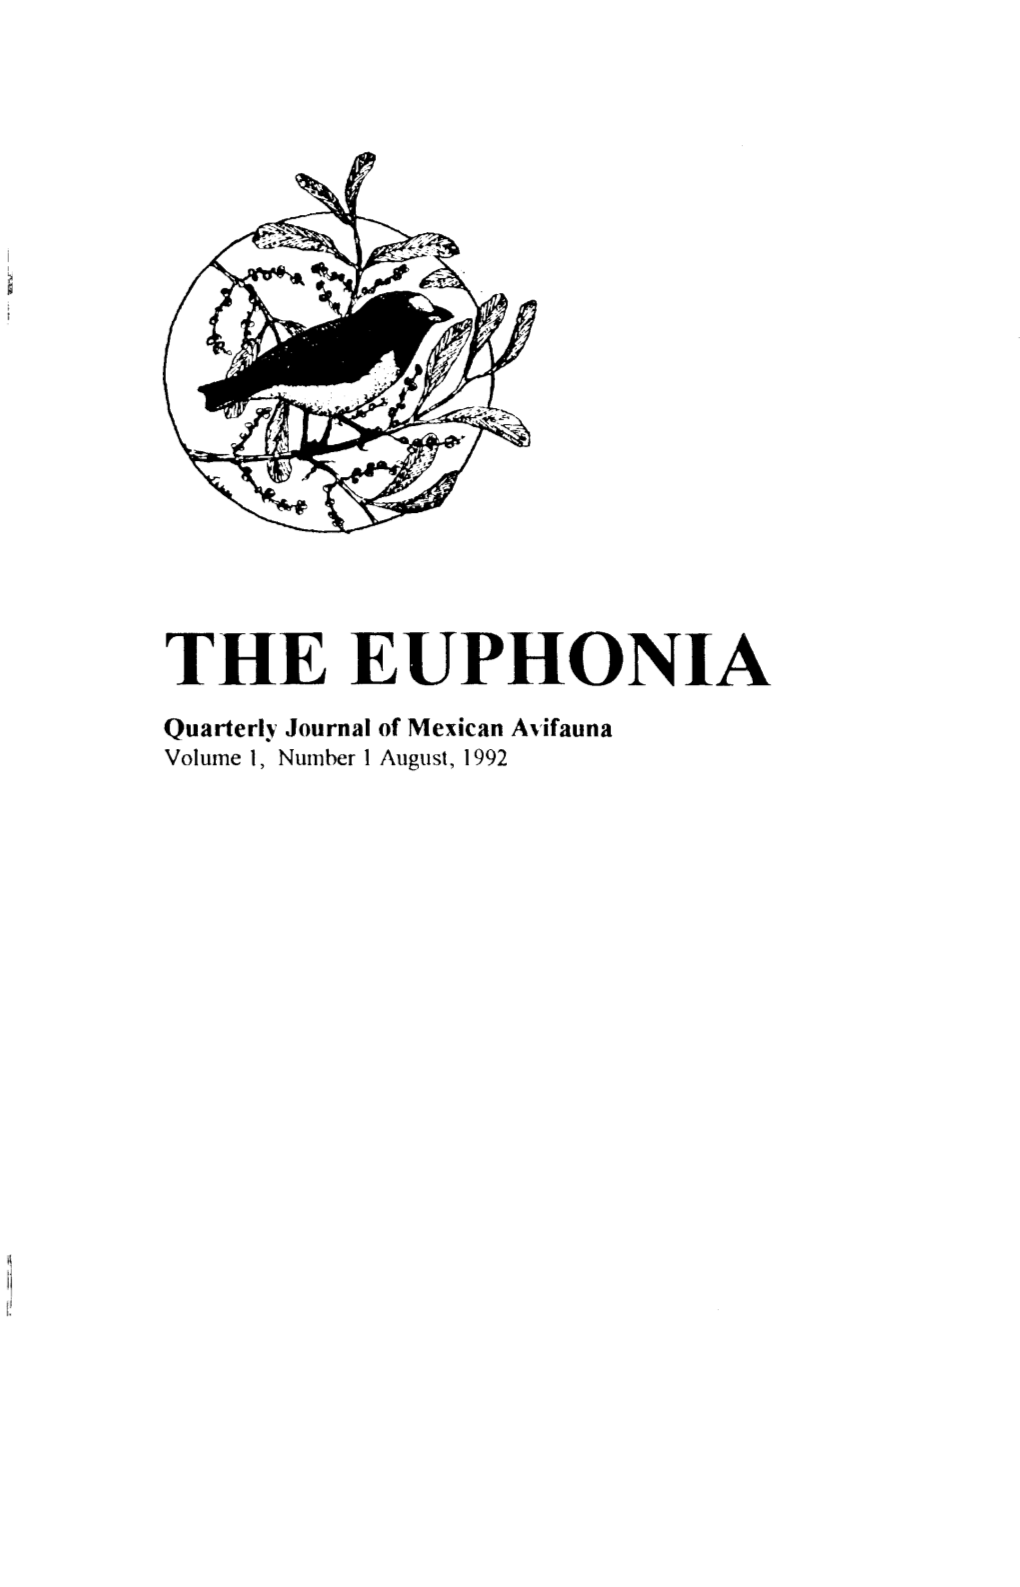 THE EUPHONIA Quarterly Journal of Mexican Avifauna Volume 1, Number I August, 1992 TI-Le EUPI-IONIA Quarterly Journal of Mexican Avifauna